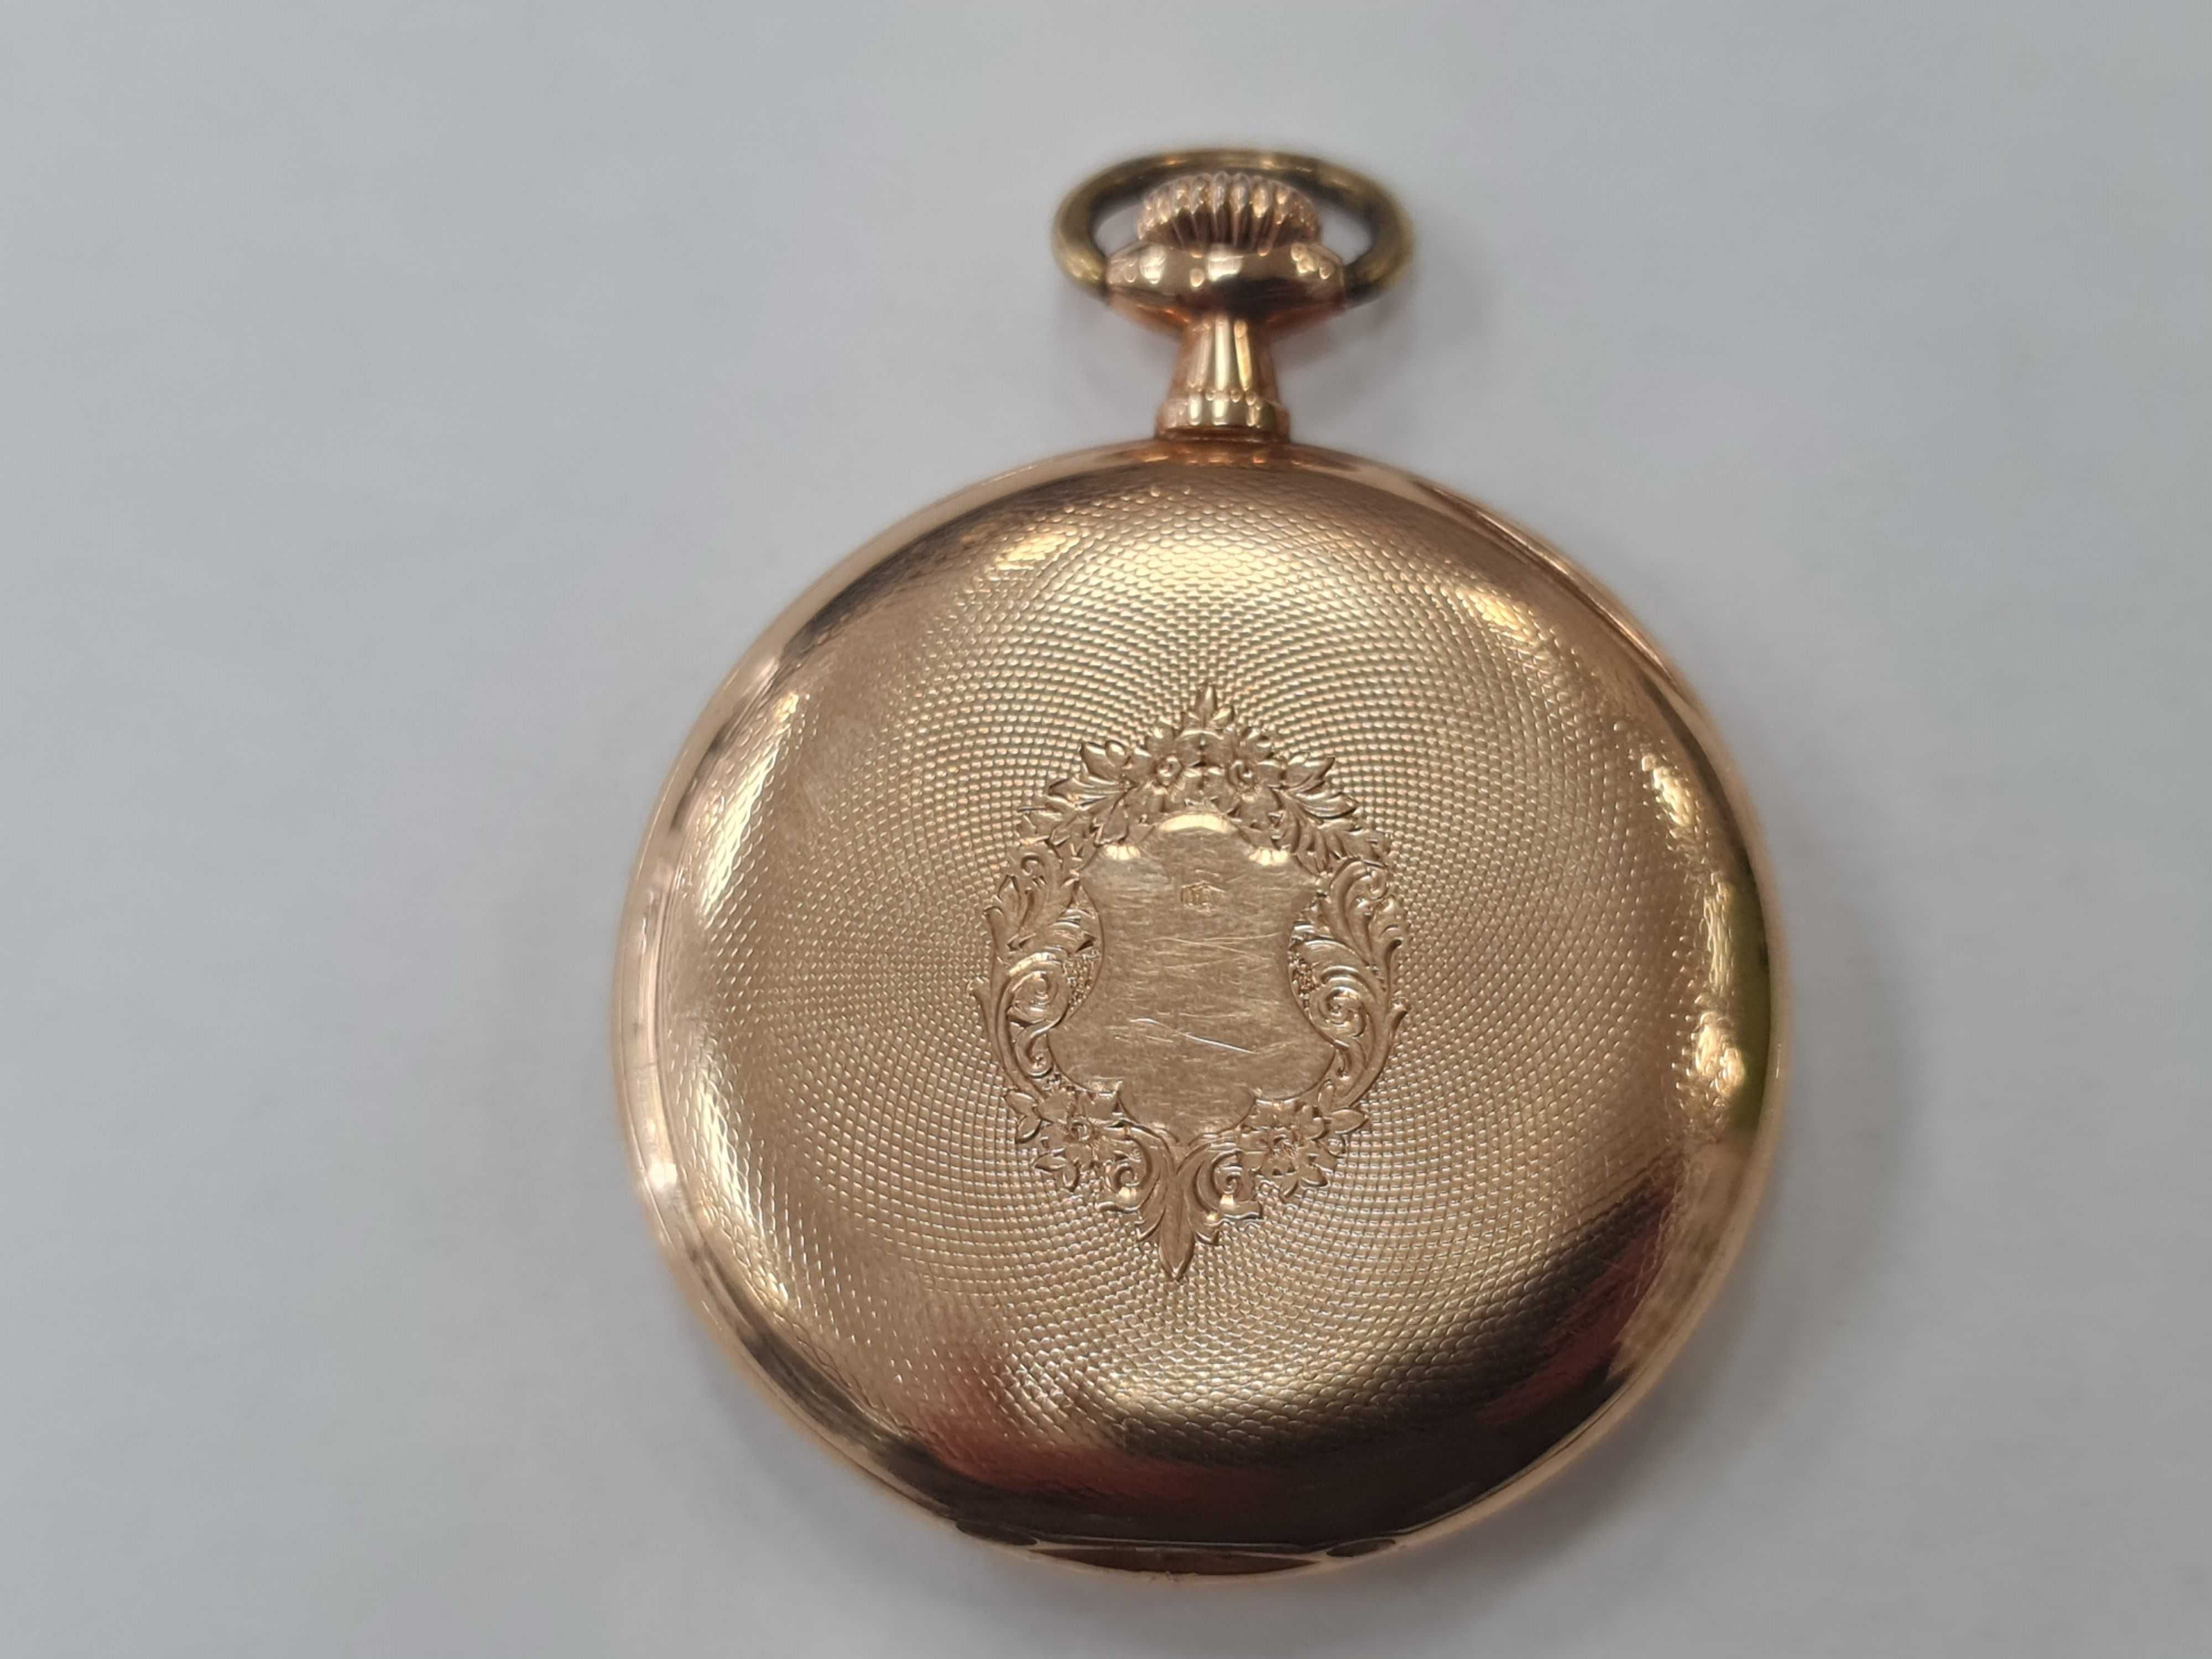 Zegarek kieszonkowy Audemars Freres Geneve/ Złoto 585/ 65.30 gram